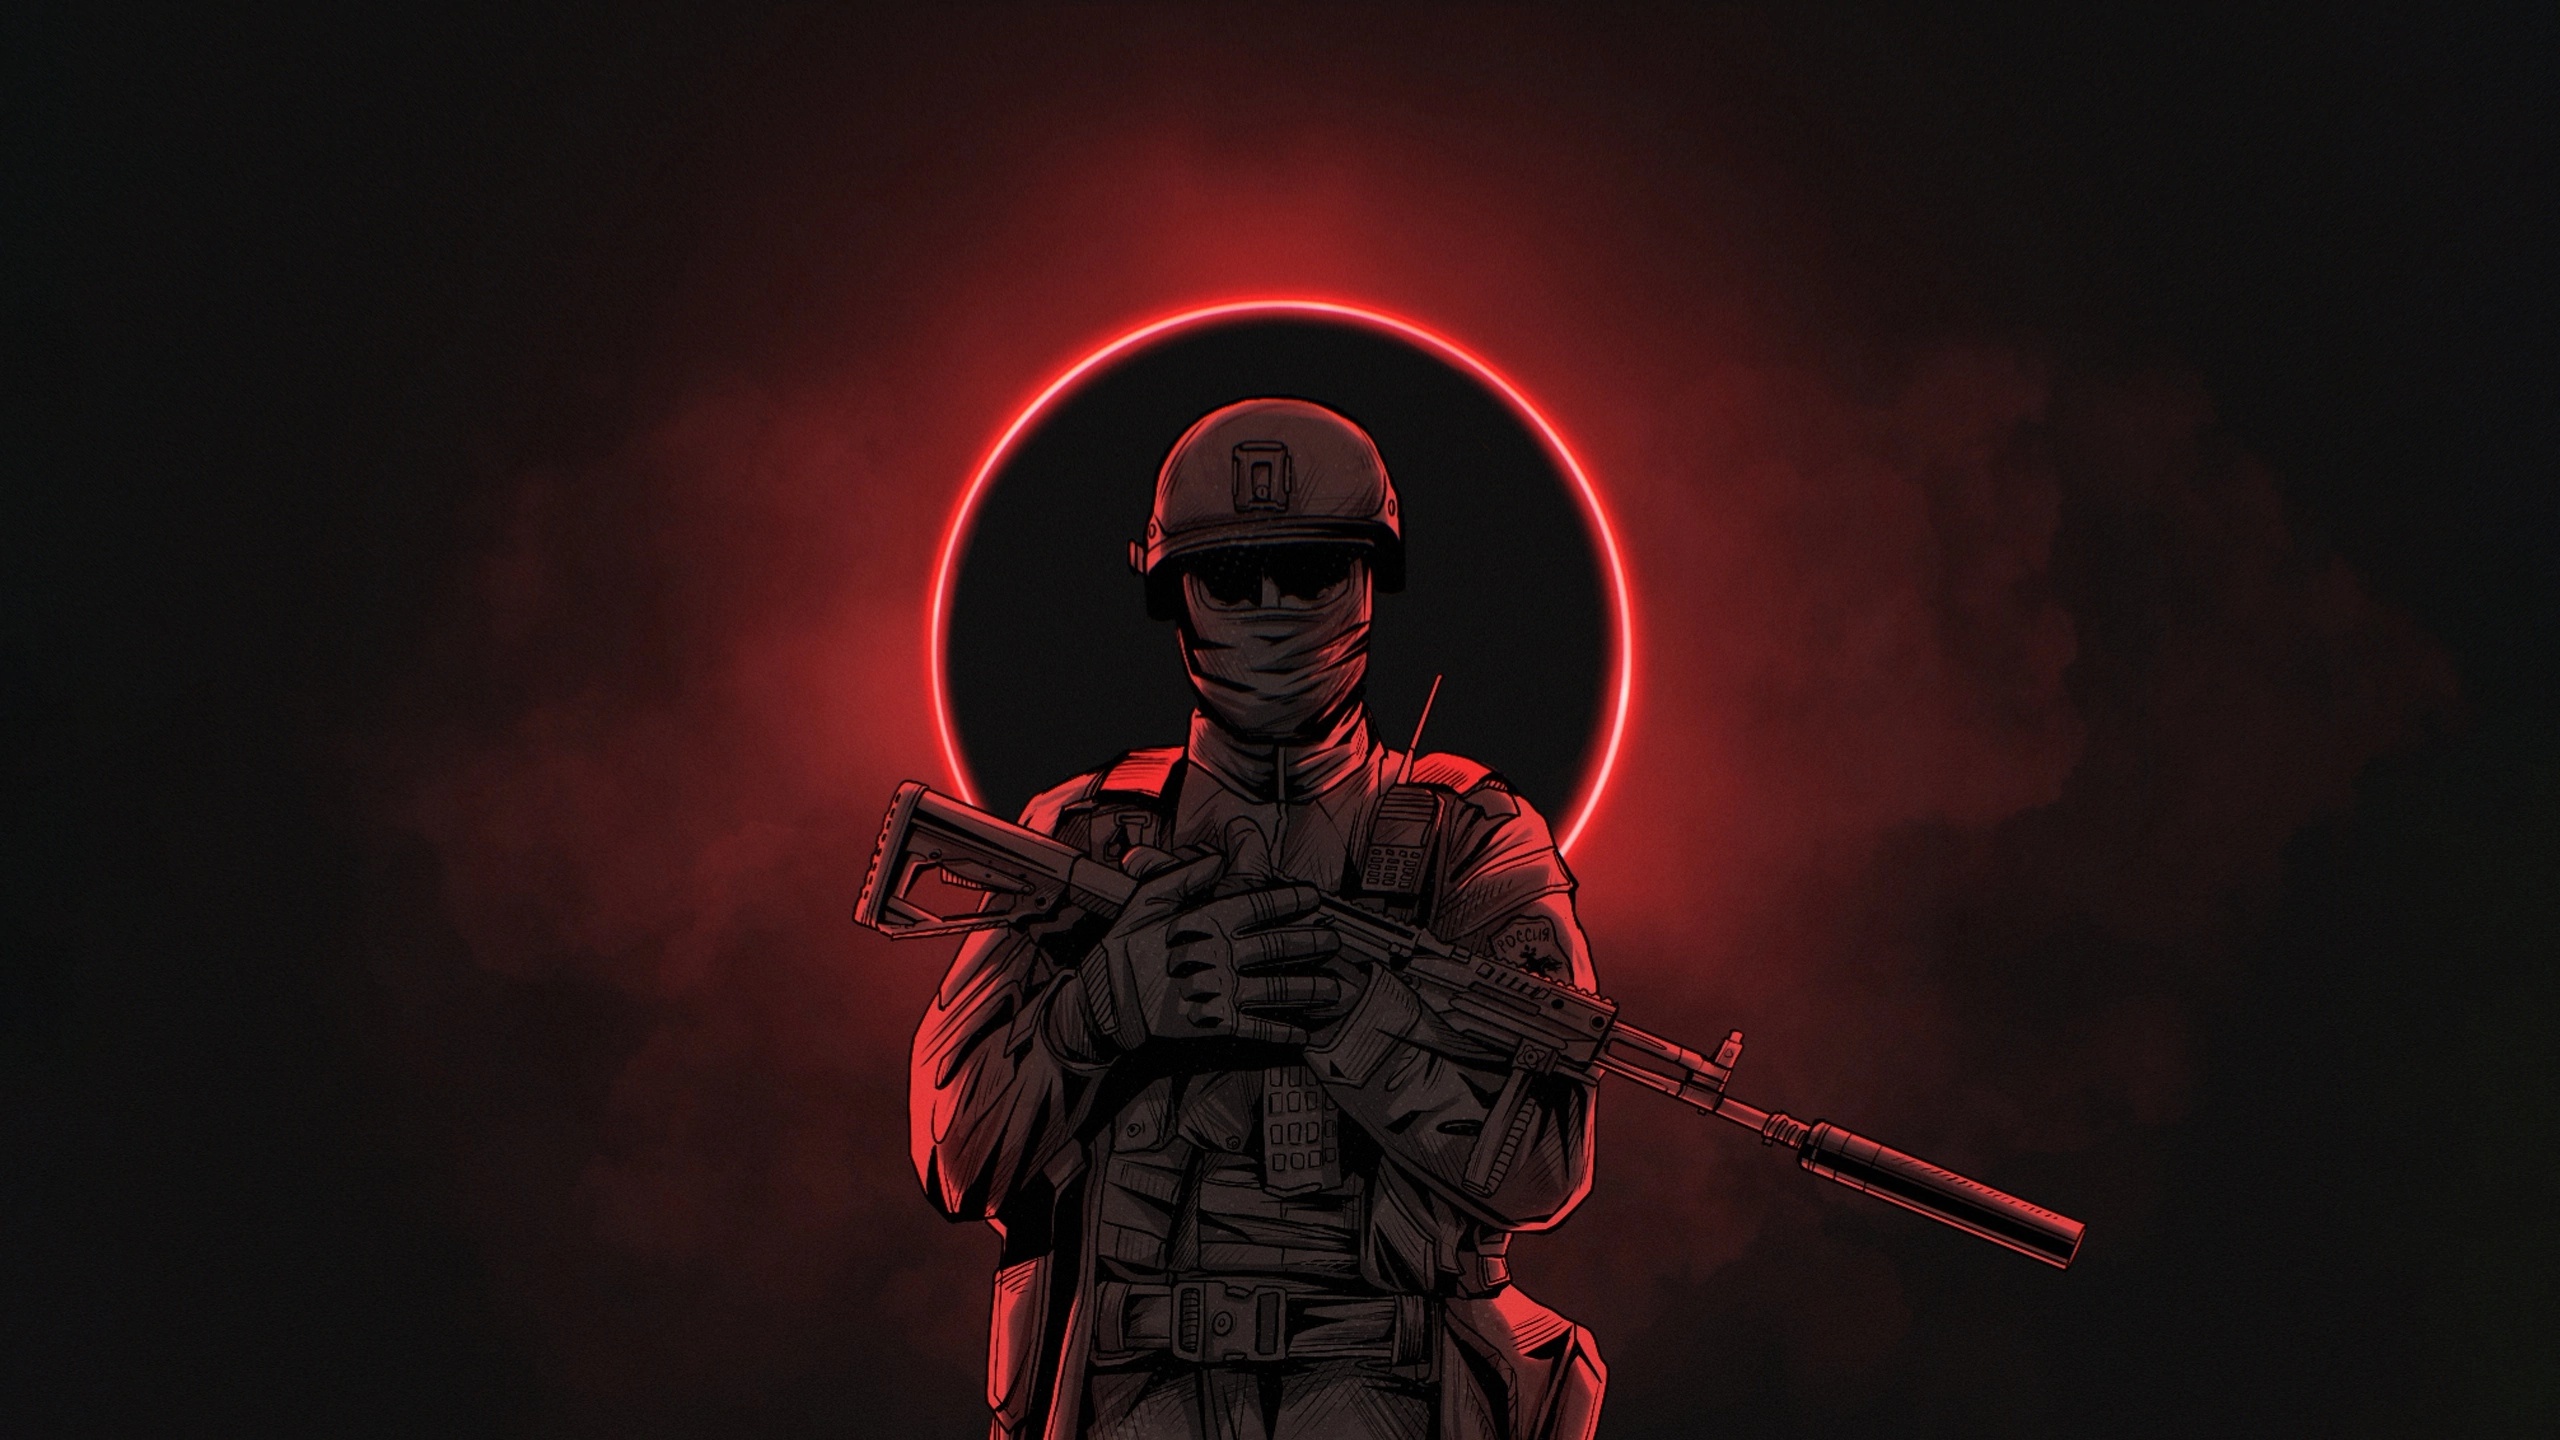 General 2560x1440 Mercenary digital art soldier simple background minimalism gun helmet